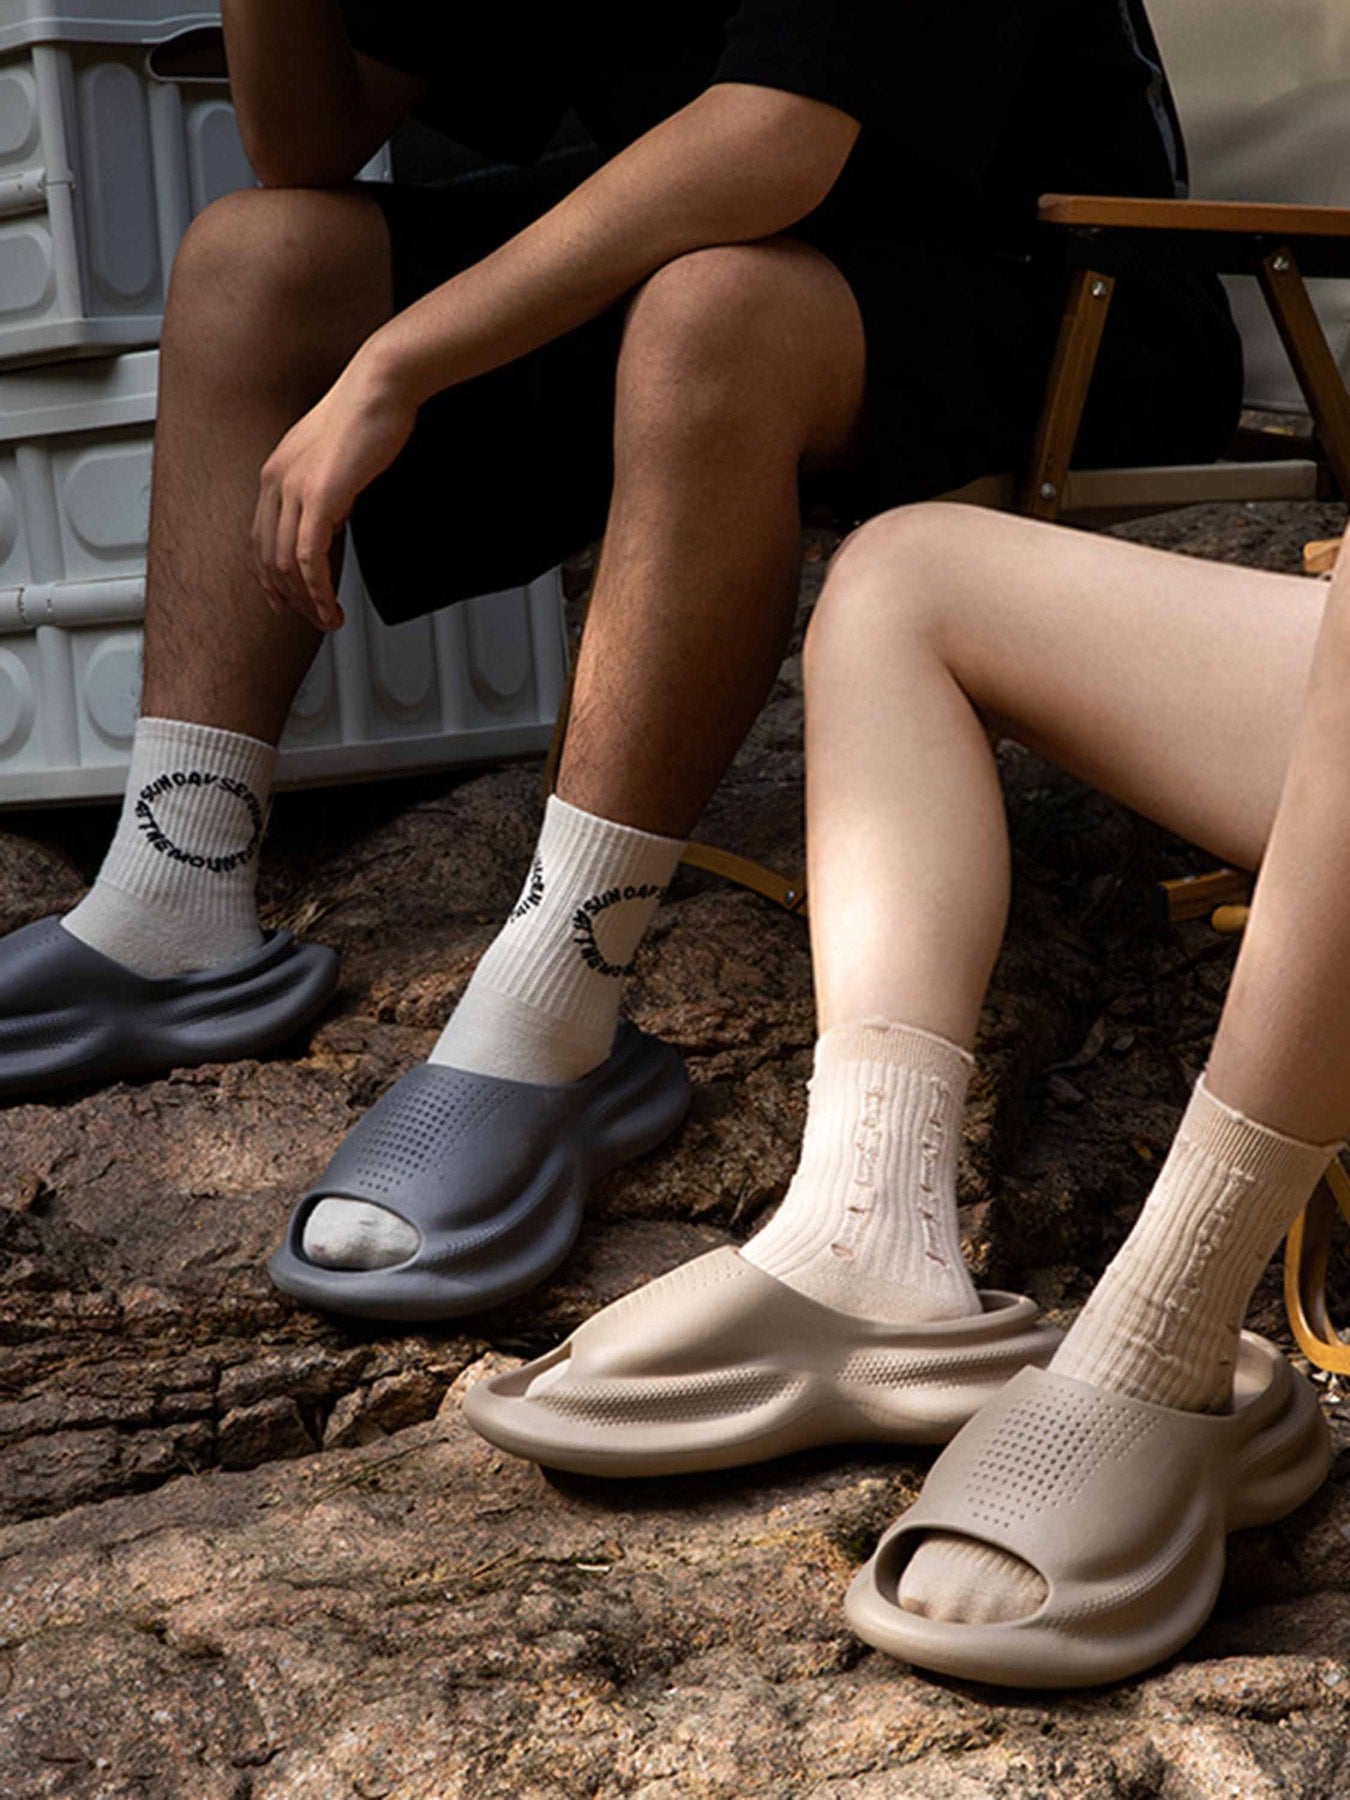 The Supermade Soft Sole EVA Sandals